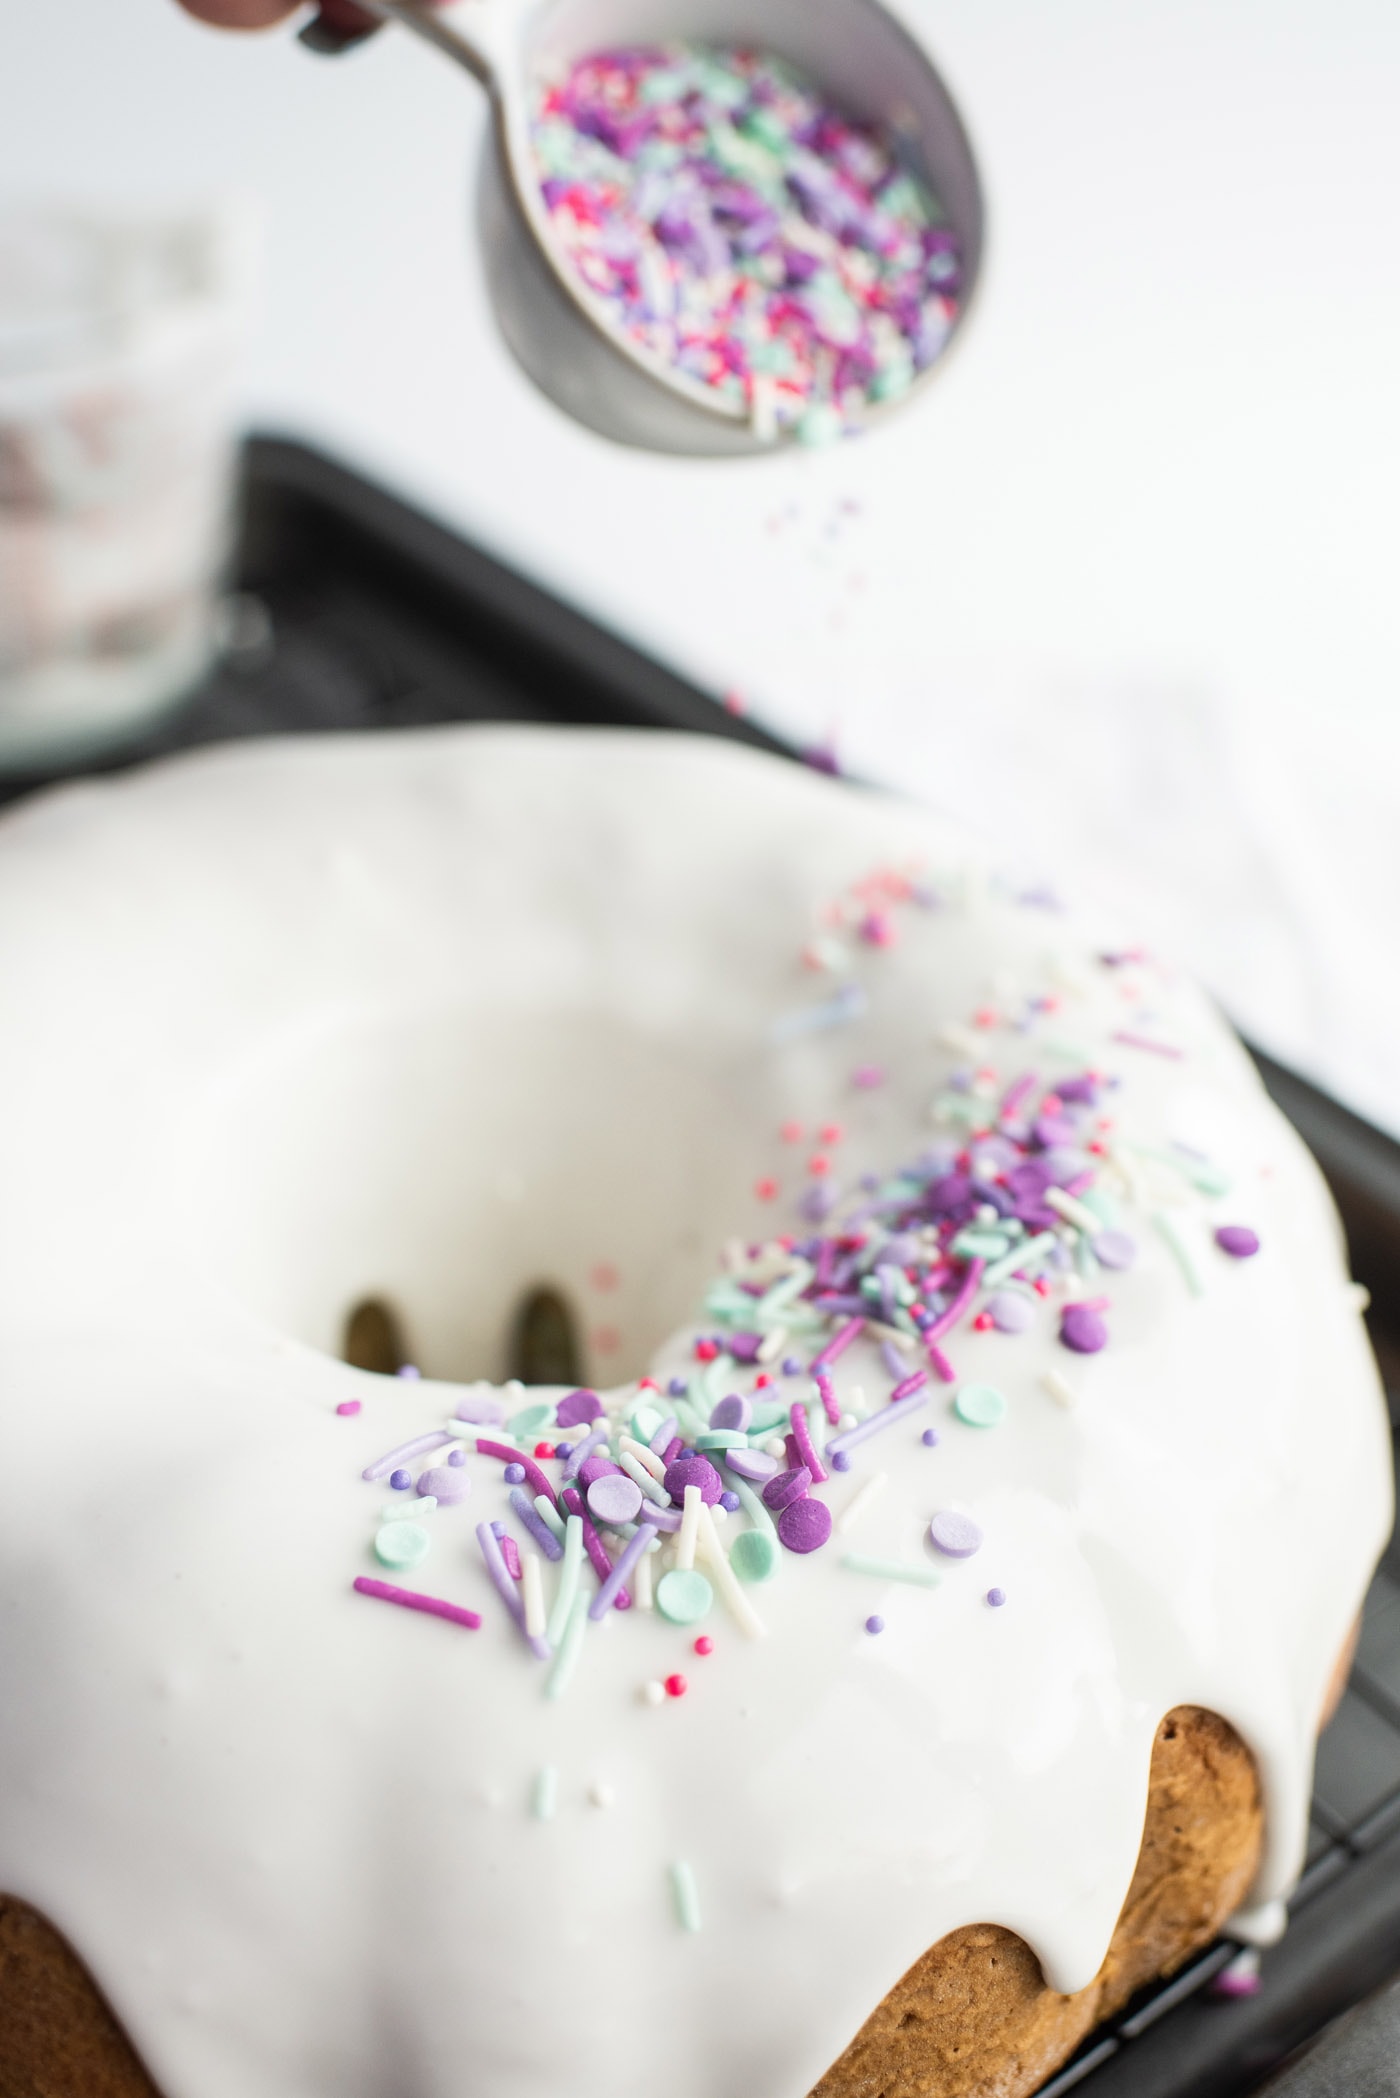 adding colorful sprinkles to glazed bundt cake